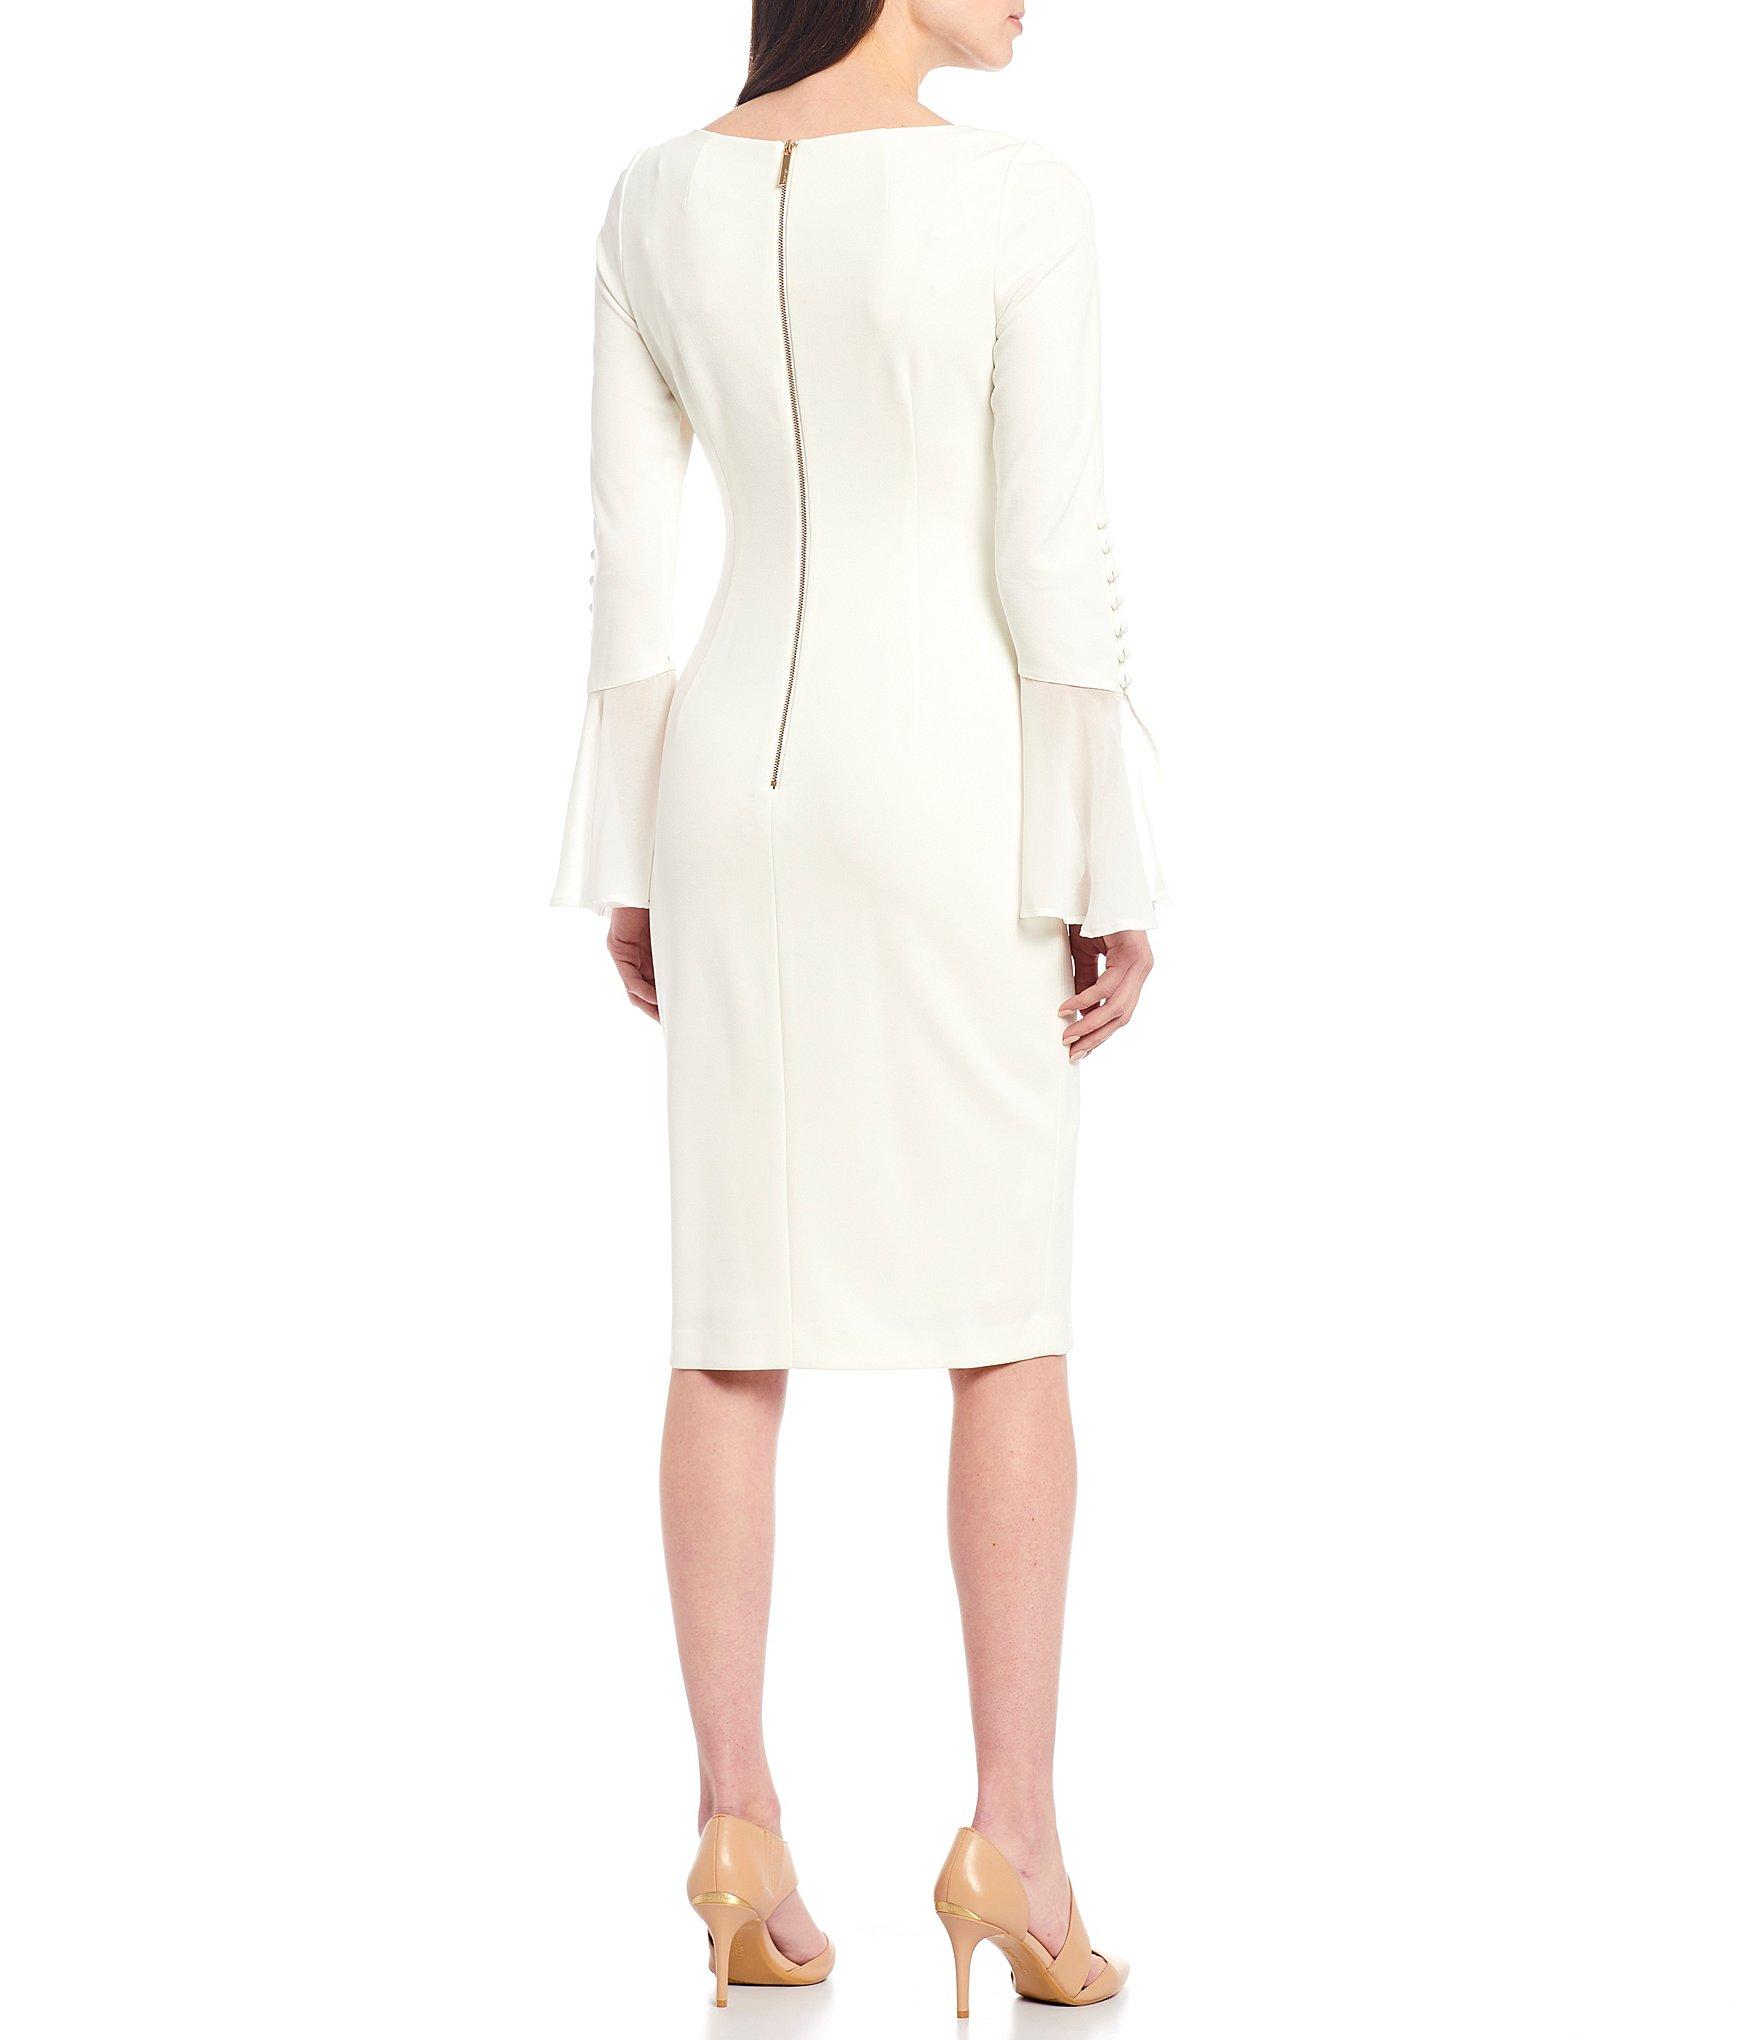 Calvin Klein Chiffon Bell Sleeve Sheath Dress in Cream (White) - Lyst